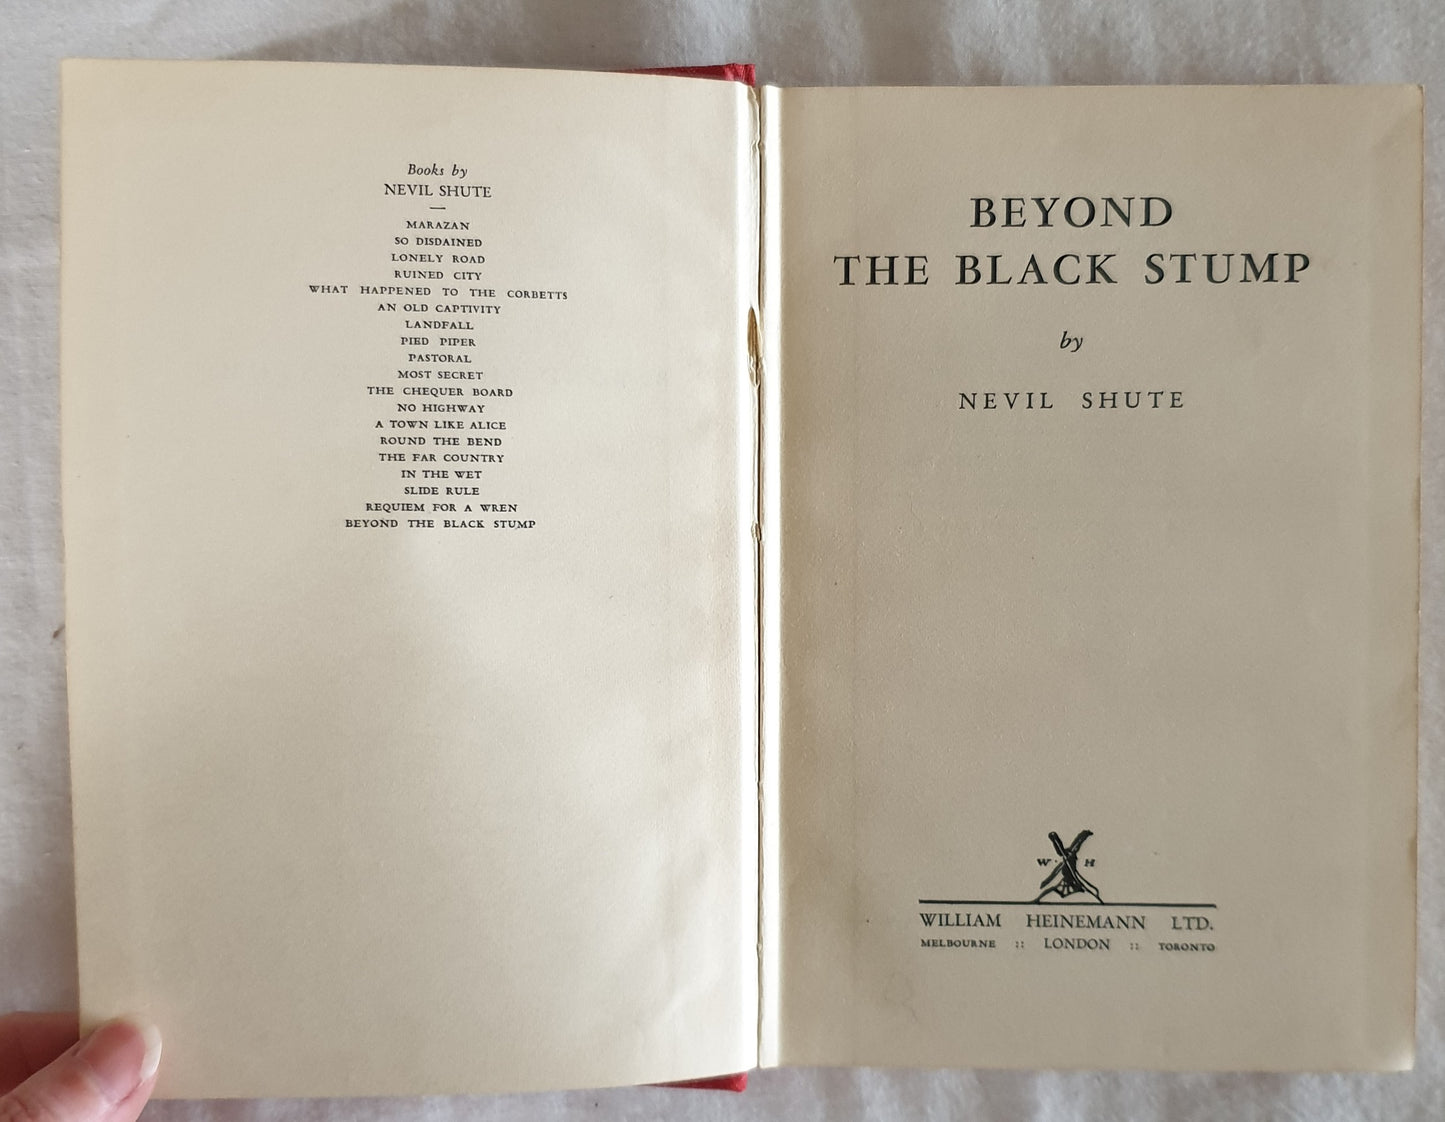 Beyond the Black Stump by Nevil Shute